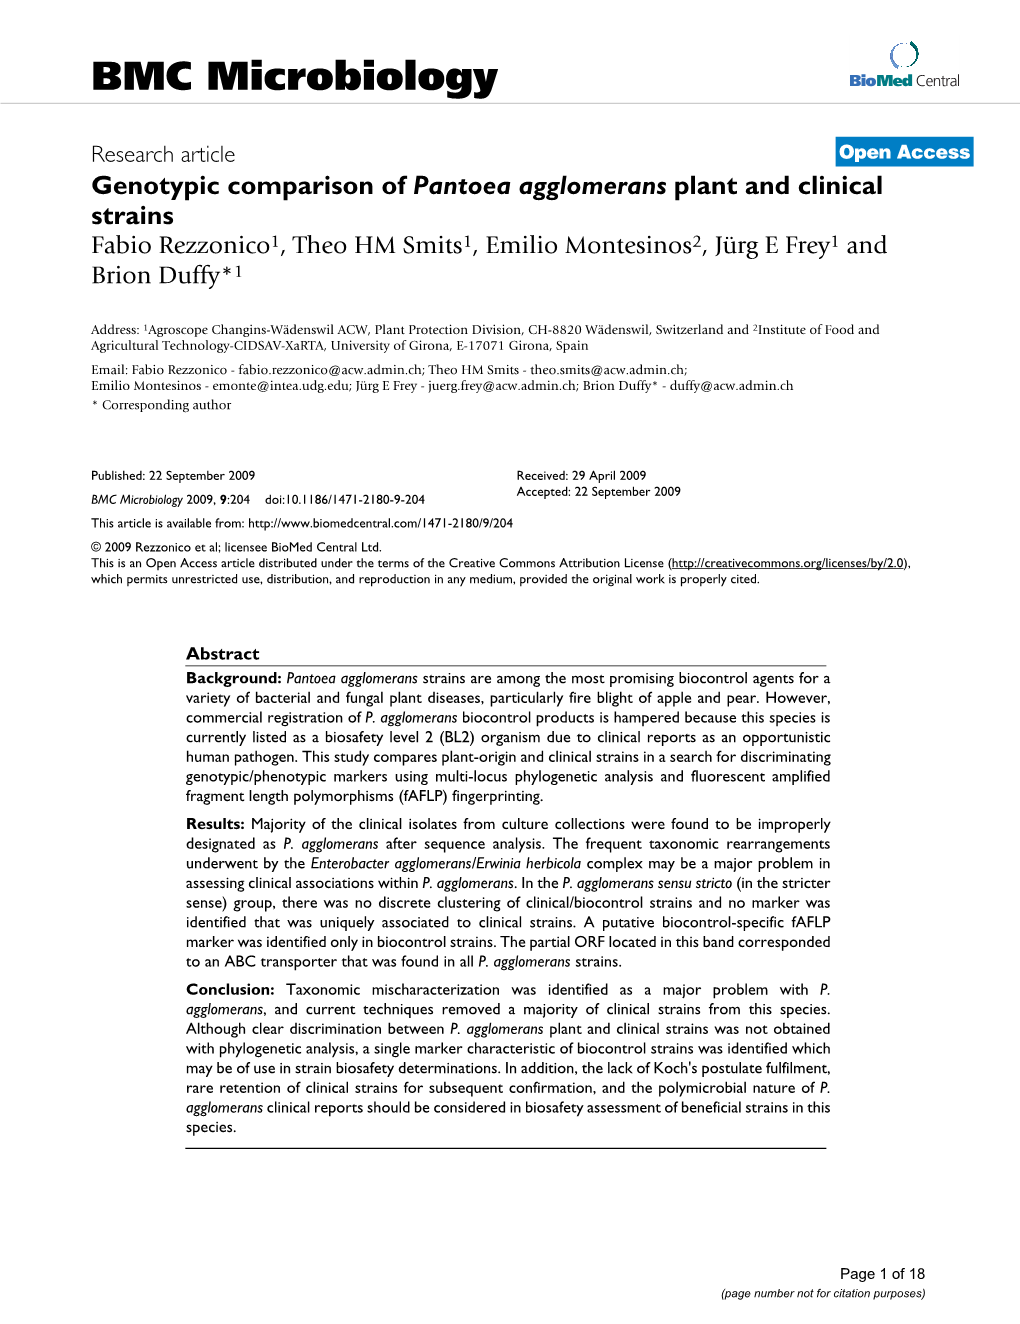 Genotypic Comparison of Pantoea Agglomerans Plant and Clinical Strains Fabio Rezzonico1, Theo HM Smits1, Emilio Montesinos2, Jürg E Frey1 and Brion Duffy*1